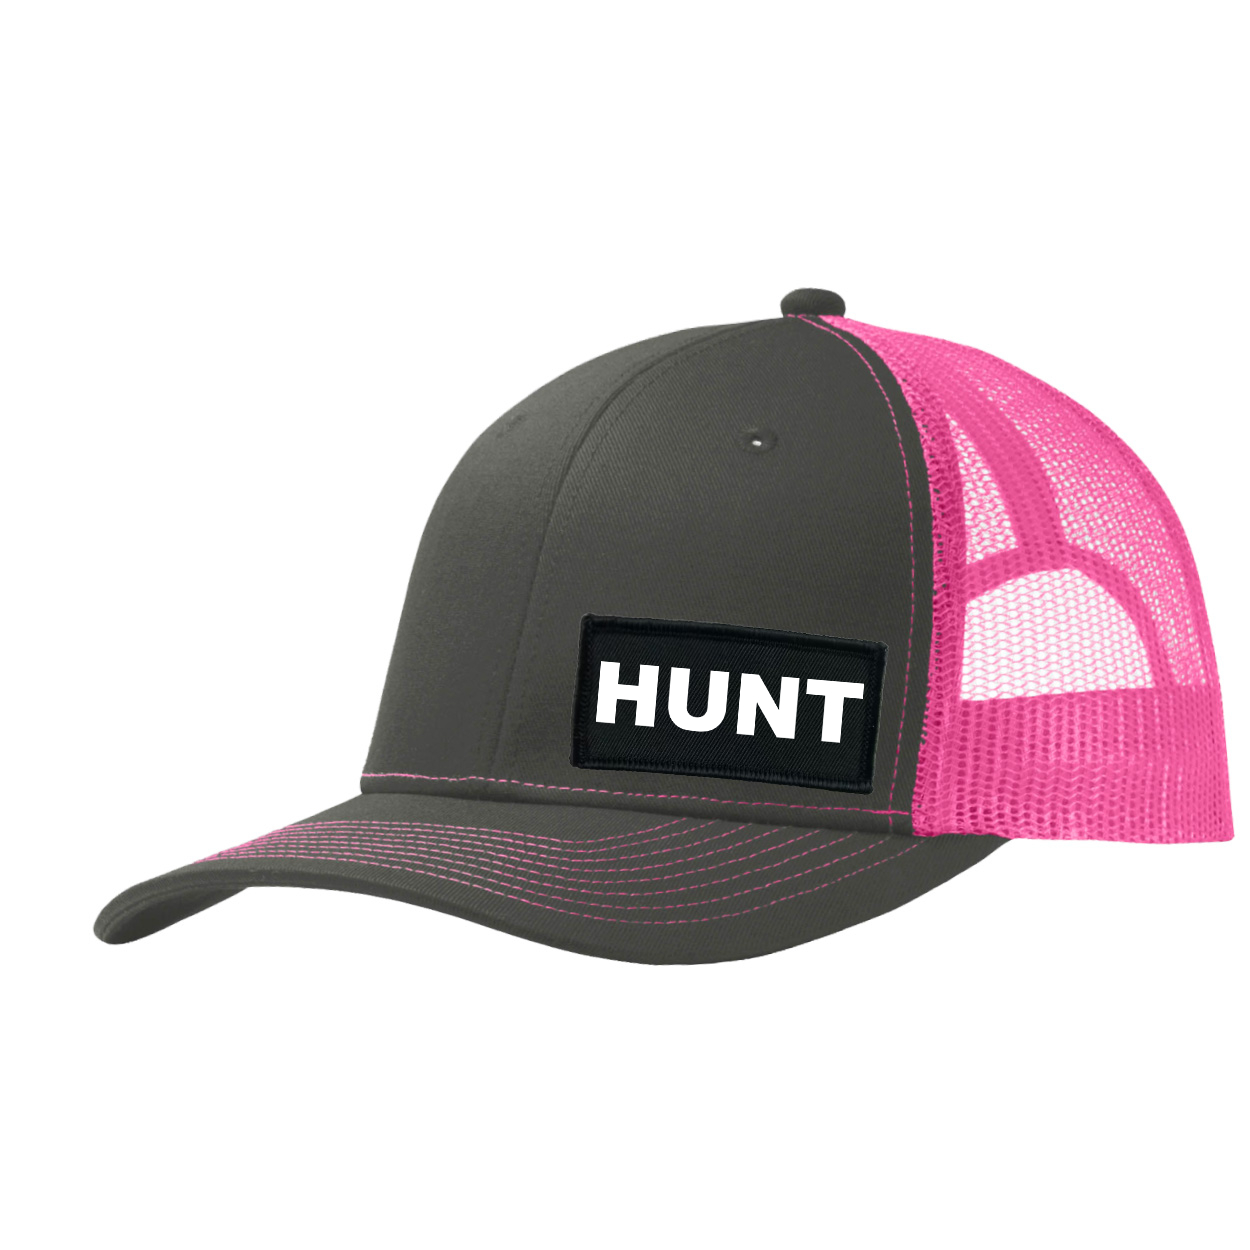 Hunt Brand Logo Night Out Woven Patch Snapback Trucker Hat Dark Gray/Neon Pink (White Logo)